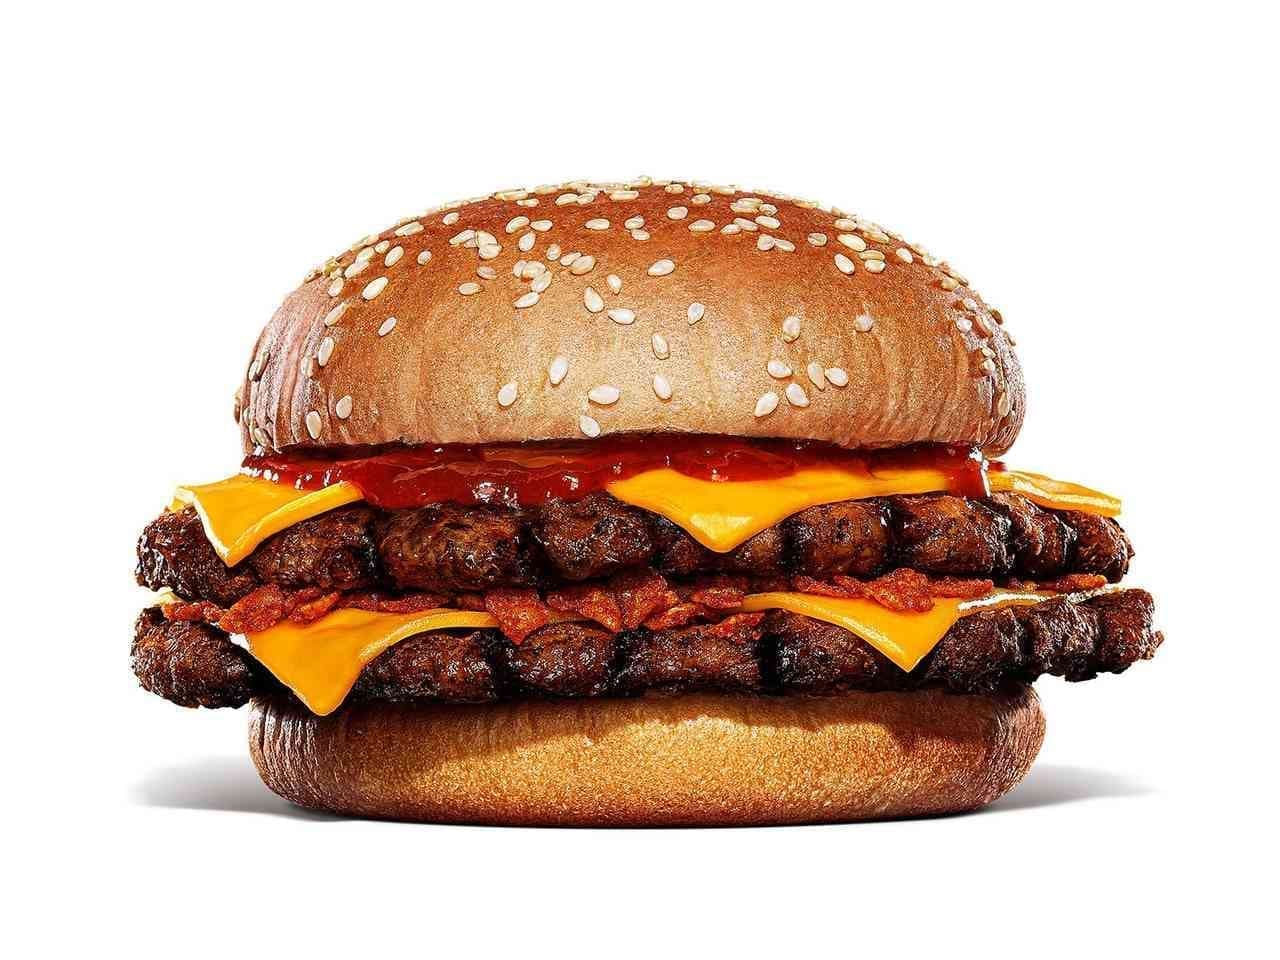 Burger King "Diablo Immortal" collaboration burgers.